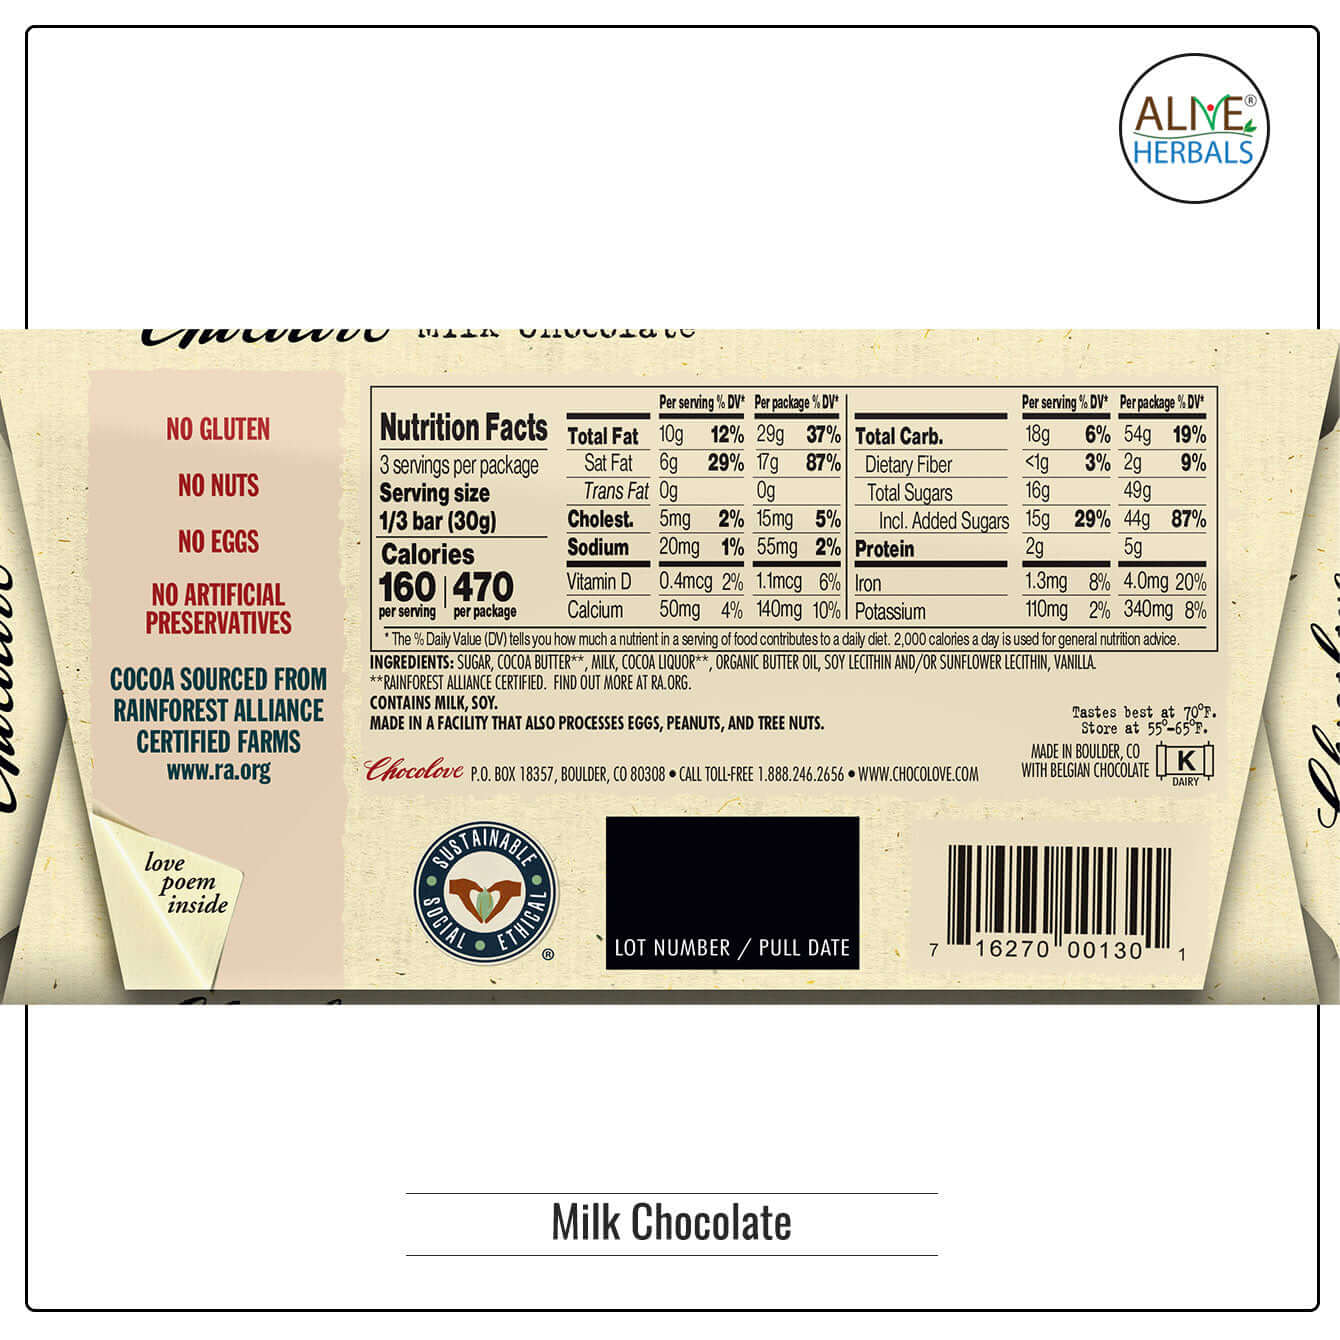 Milk Chocolate - Buy at Natural Food Store | Alive Herbals.